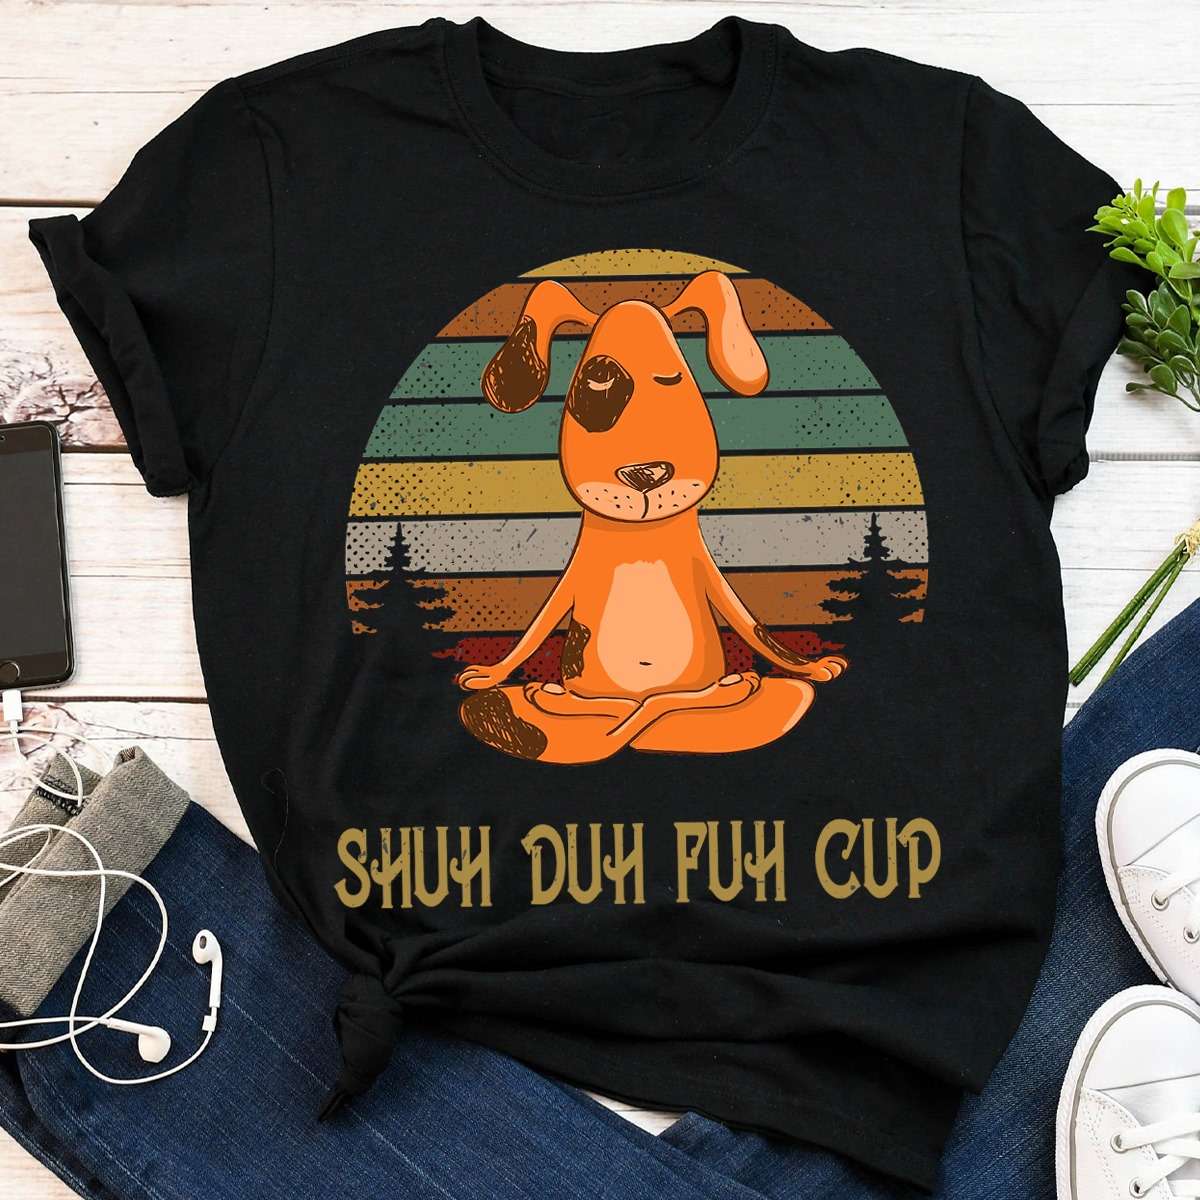 Shuh duh fuh cup - Shut the fuck up, Dog doing yoga